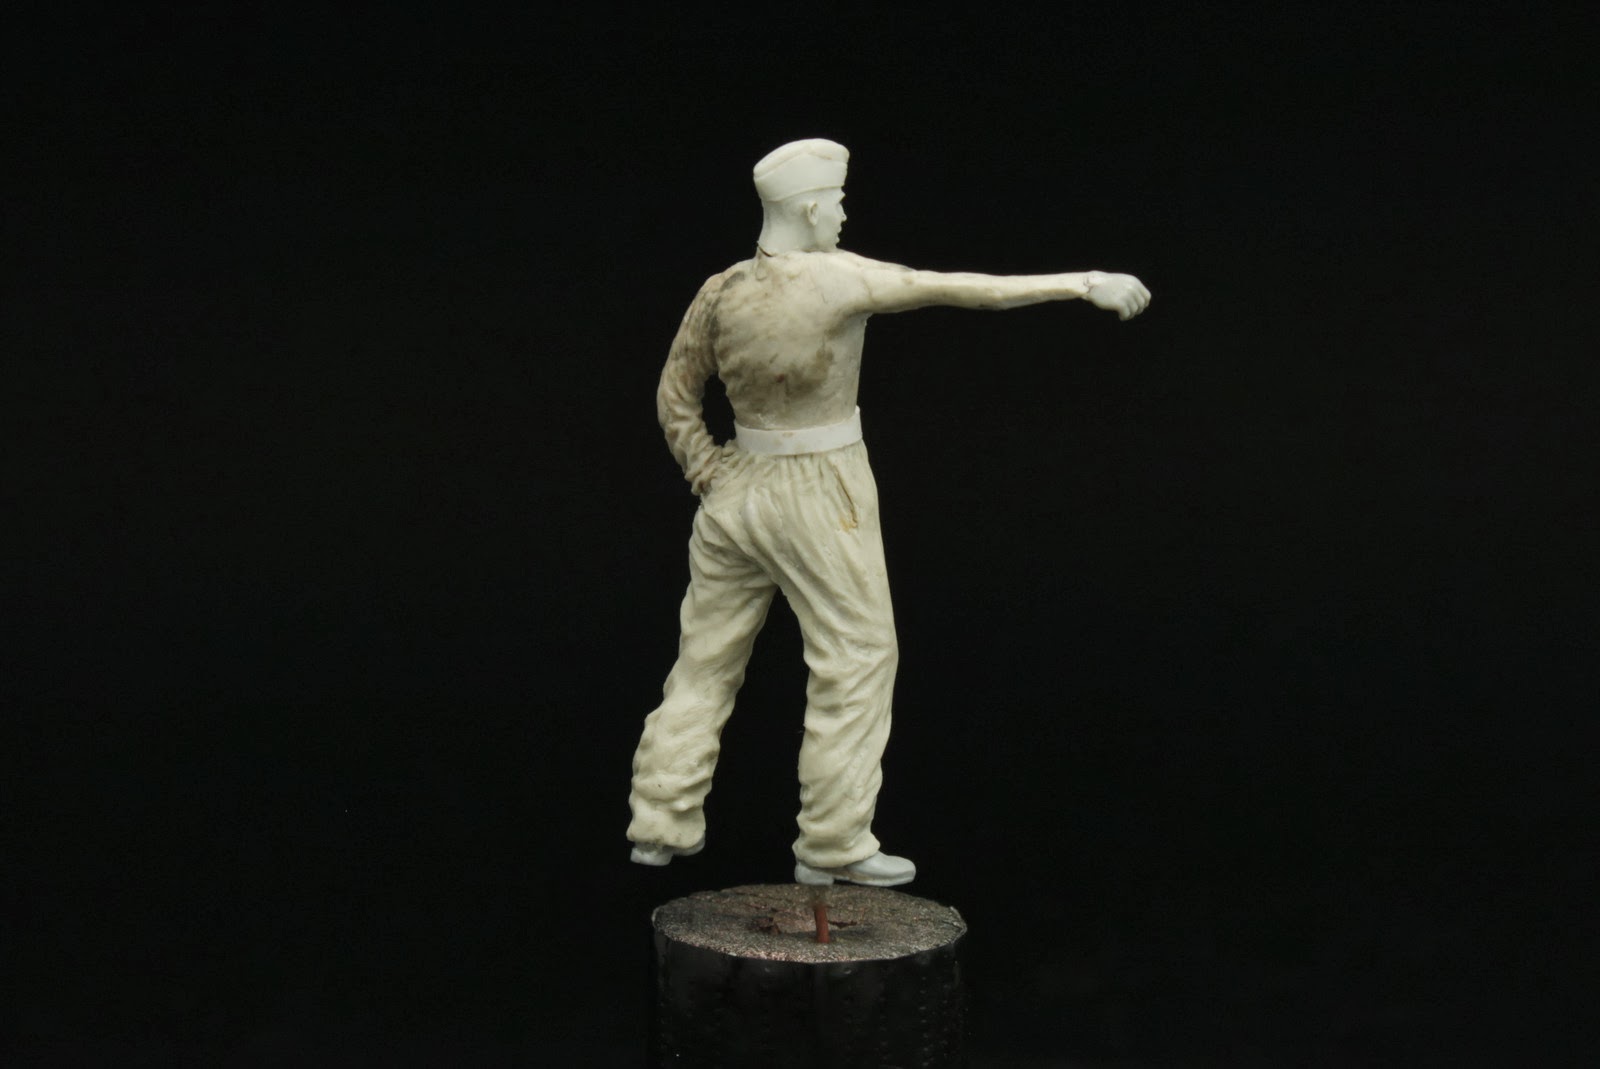 Master модели. Мастер моделс. Dardevil Figure sculptor. DC ares Figure sculptor. We Sculpt Figures from Solid Foam.